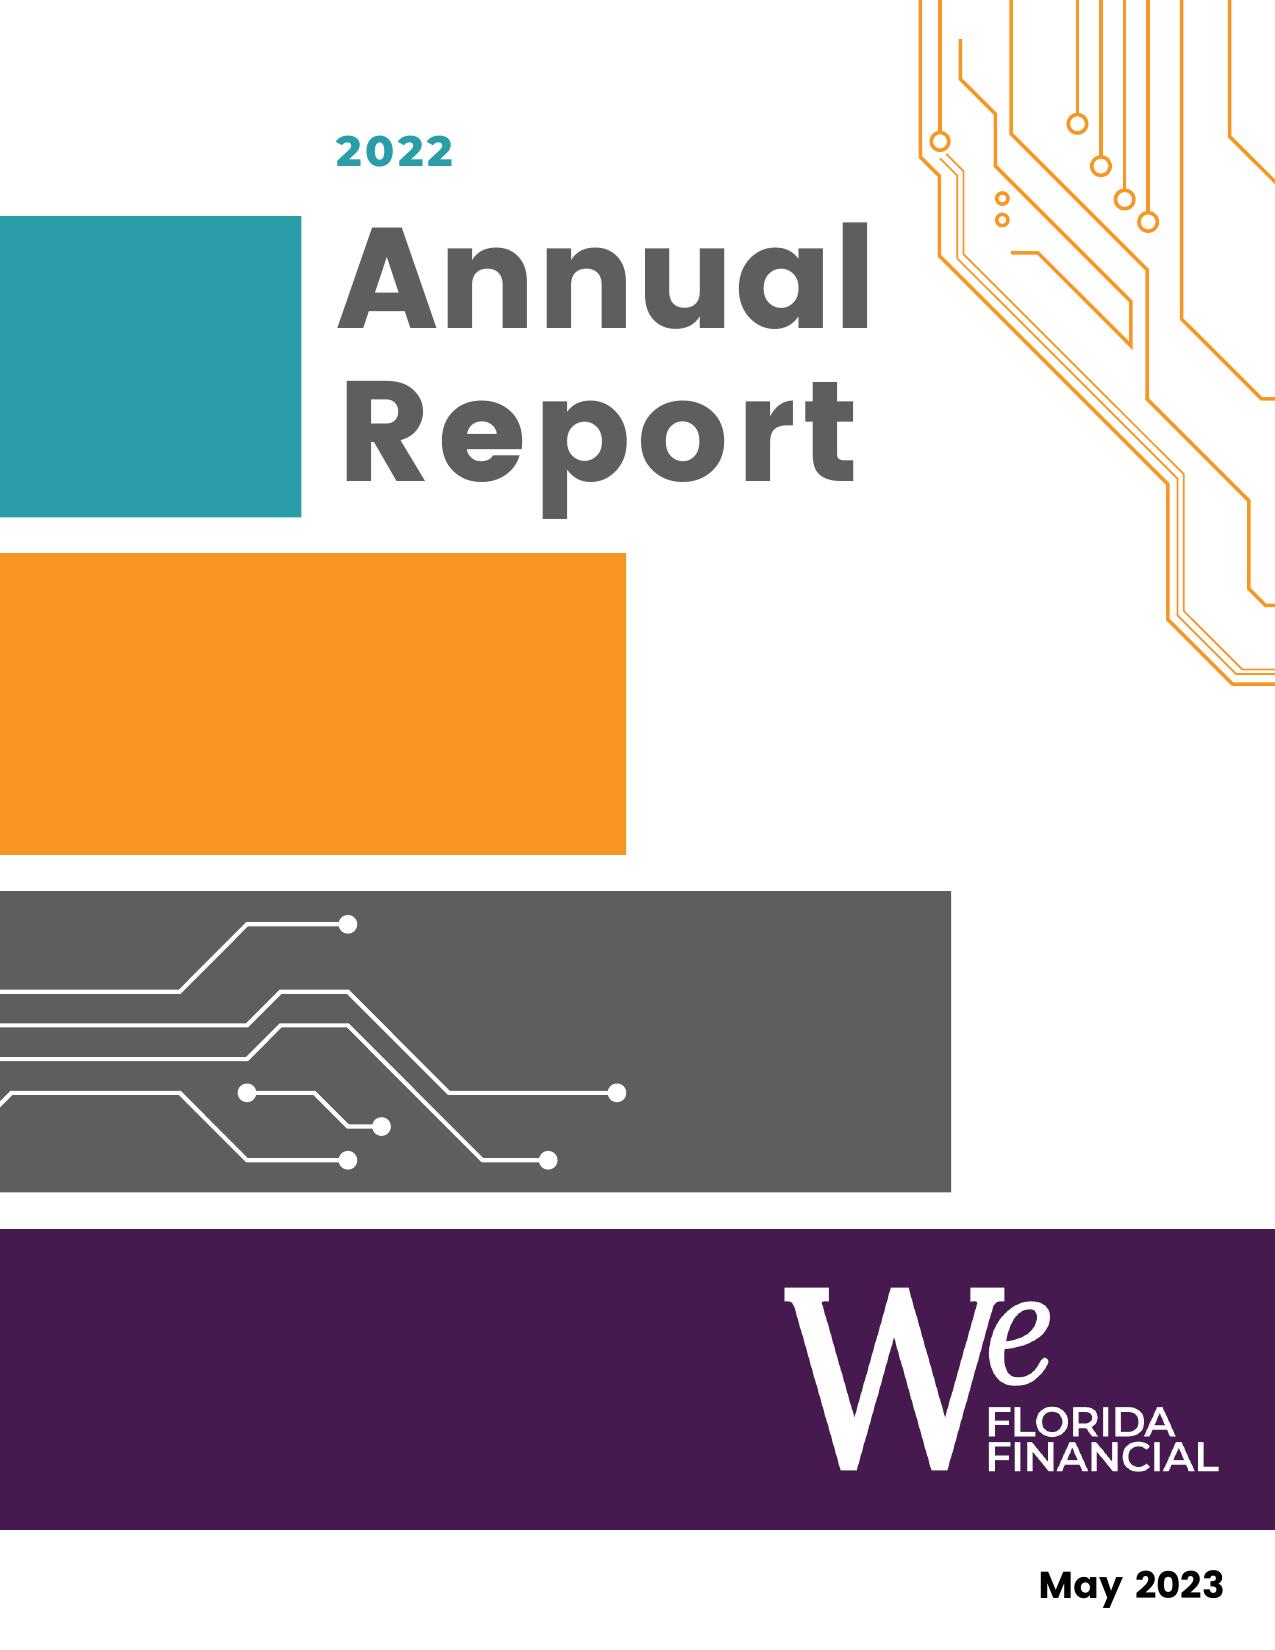 WEFLORIDAFINANCIAL 2022 Annual Report